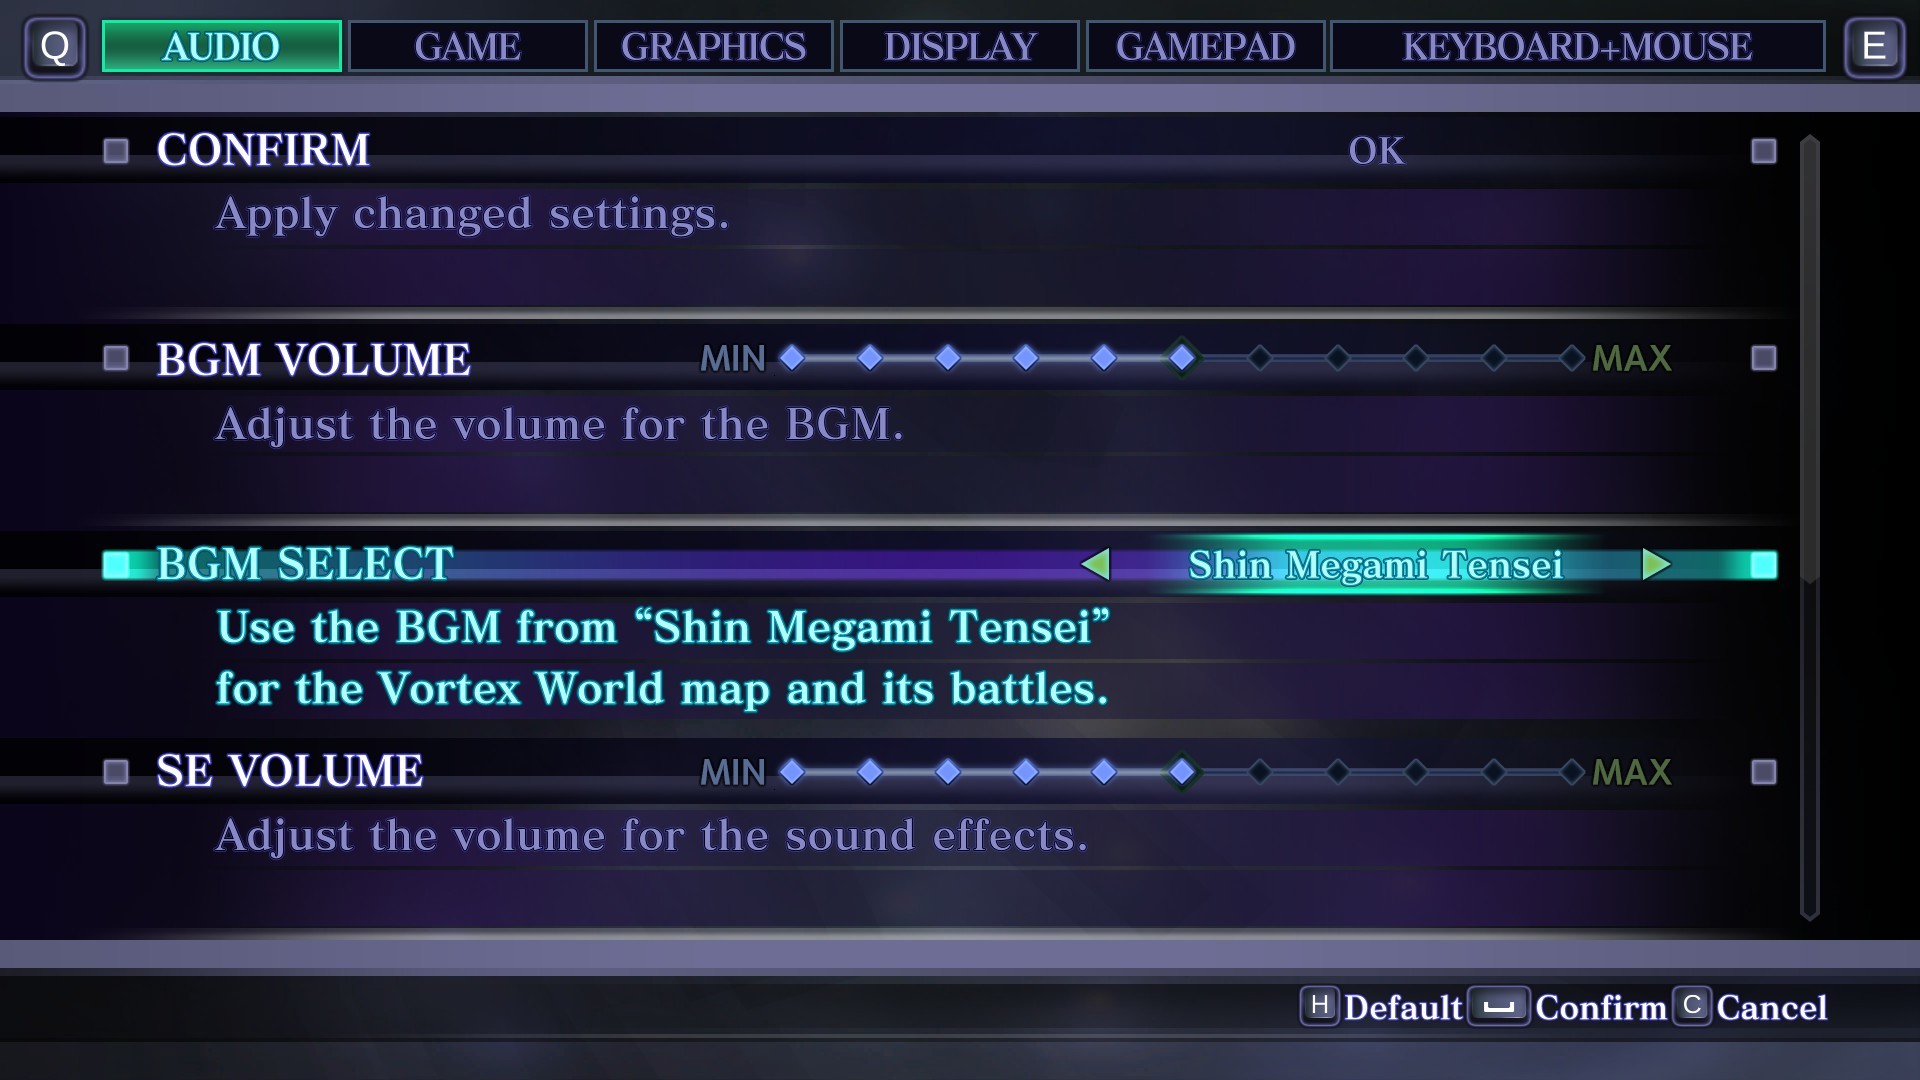 Shin Megami Tensei III Nocturne HD Remaster - Shin Megami Tensei BGM Pack Featured Screenshot #1